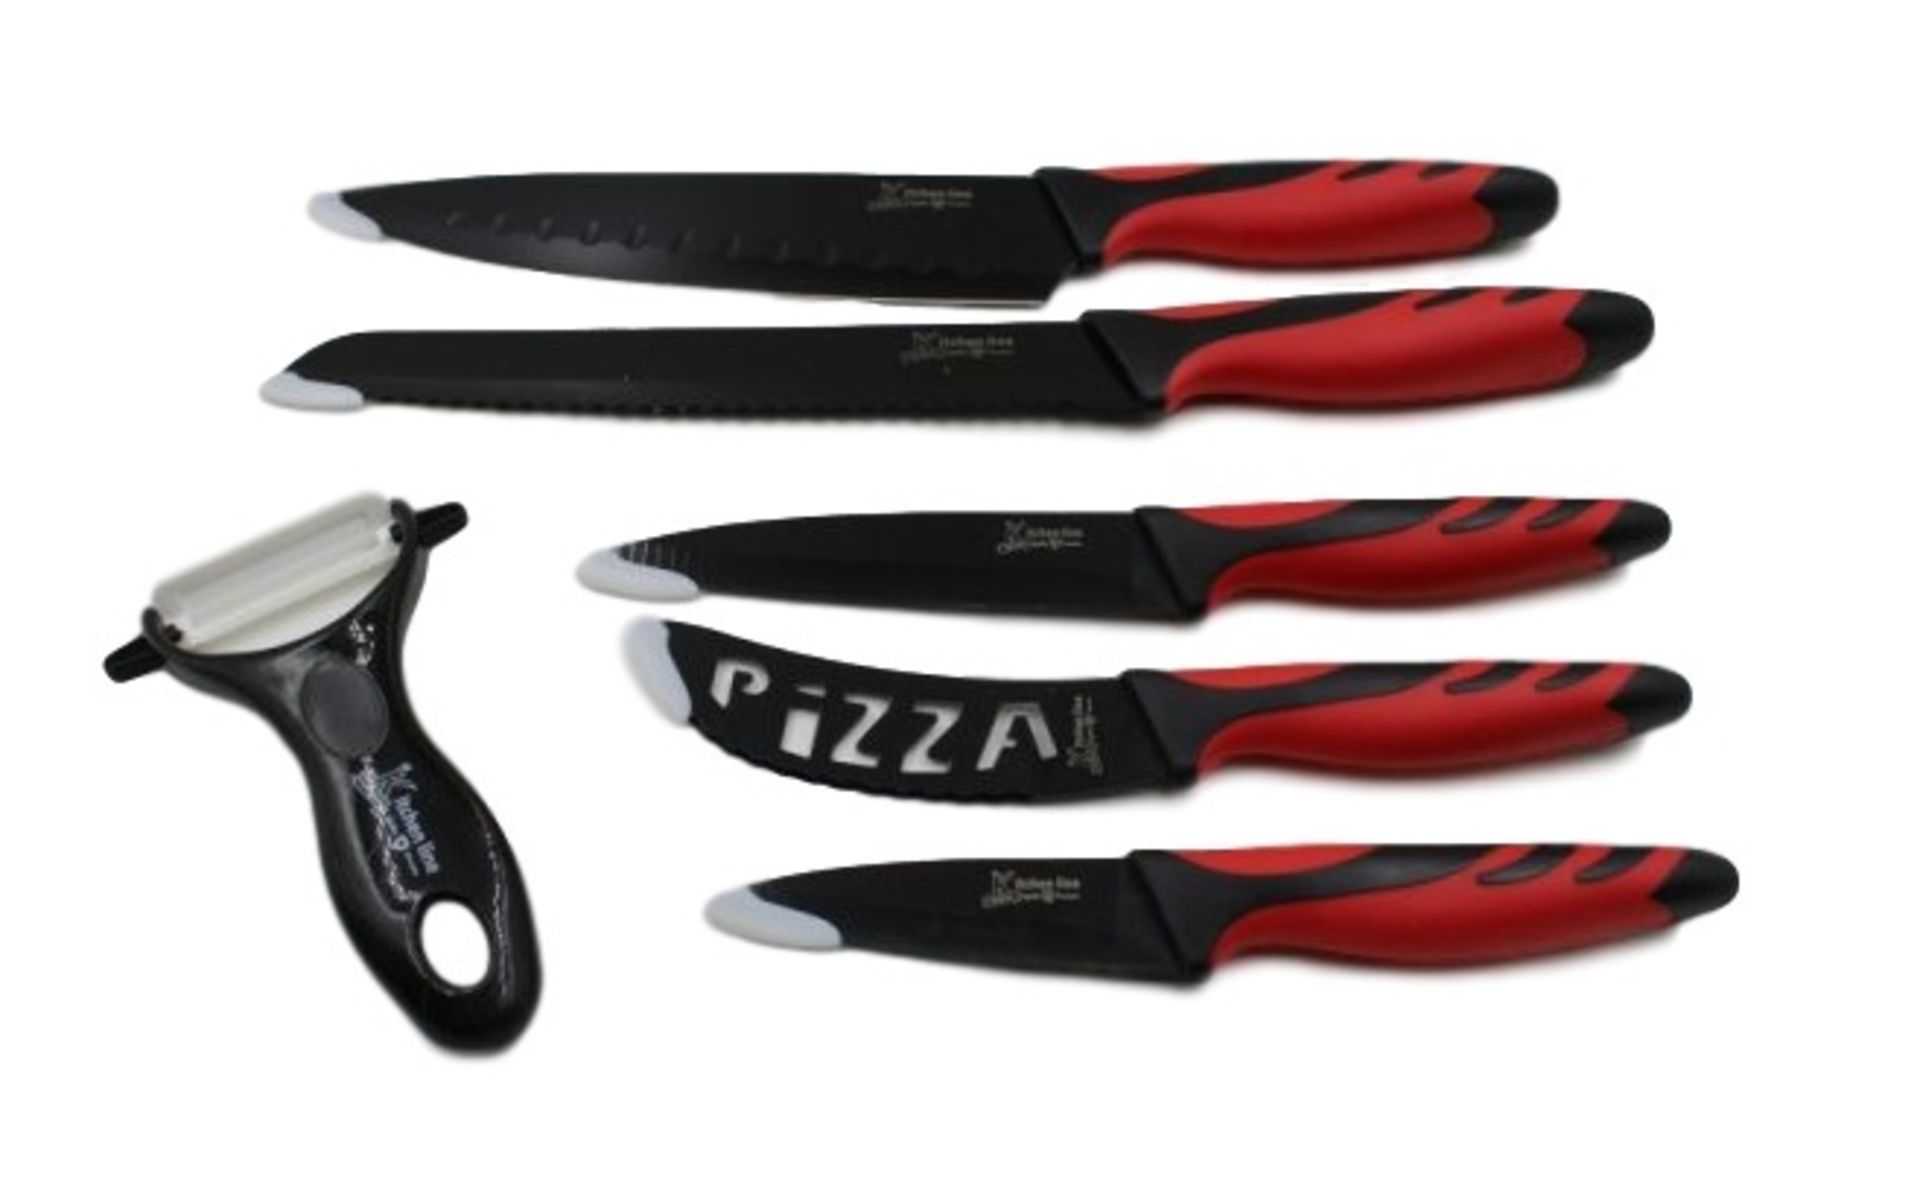 V *TRADE QTY* Brand New Six Piece Knife Set Inc: 8" Chef Knife/8" Bread Knife/5" Utility Knife/3.